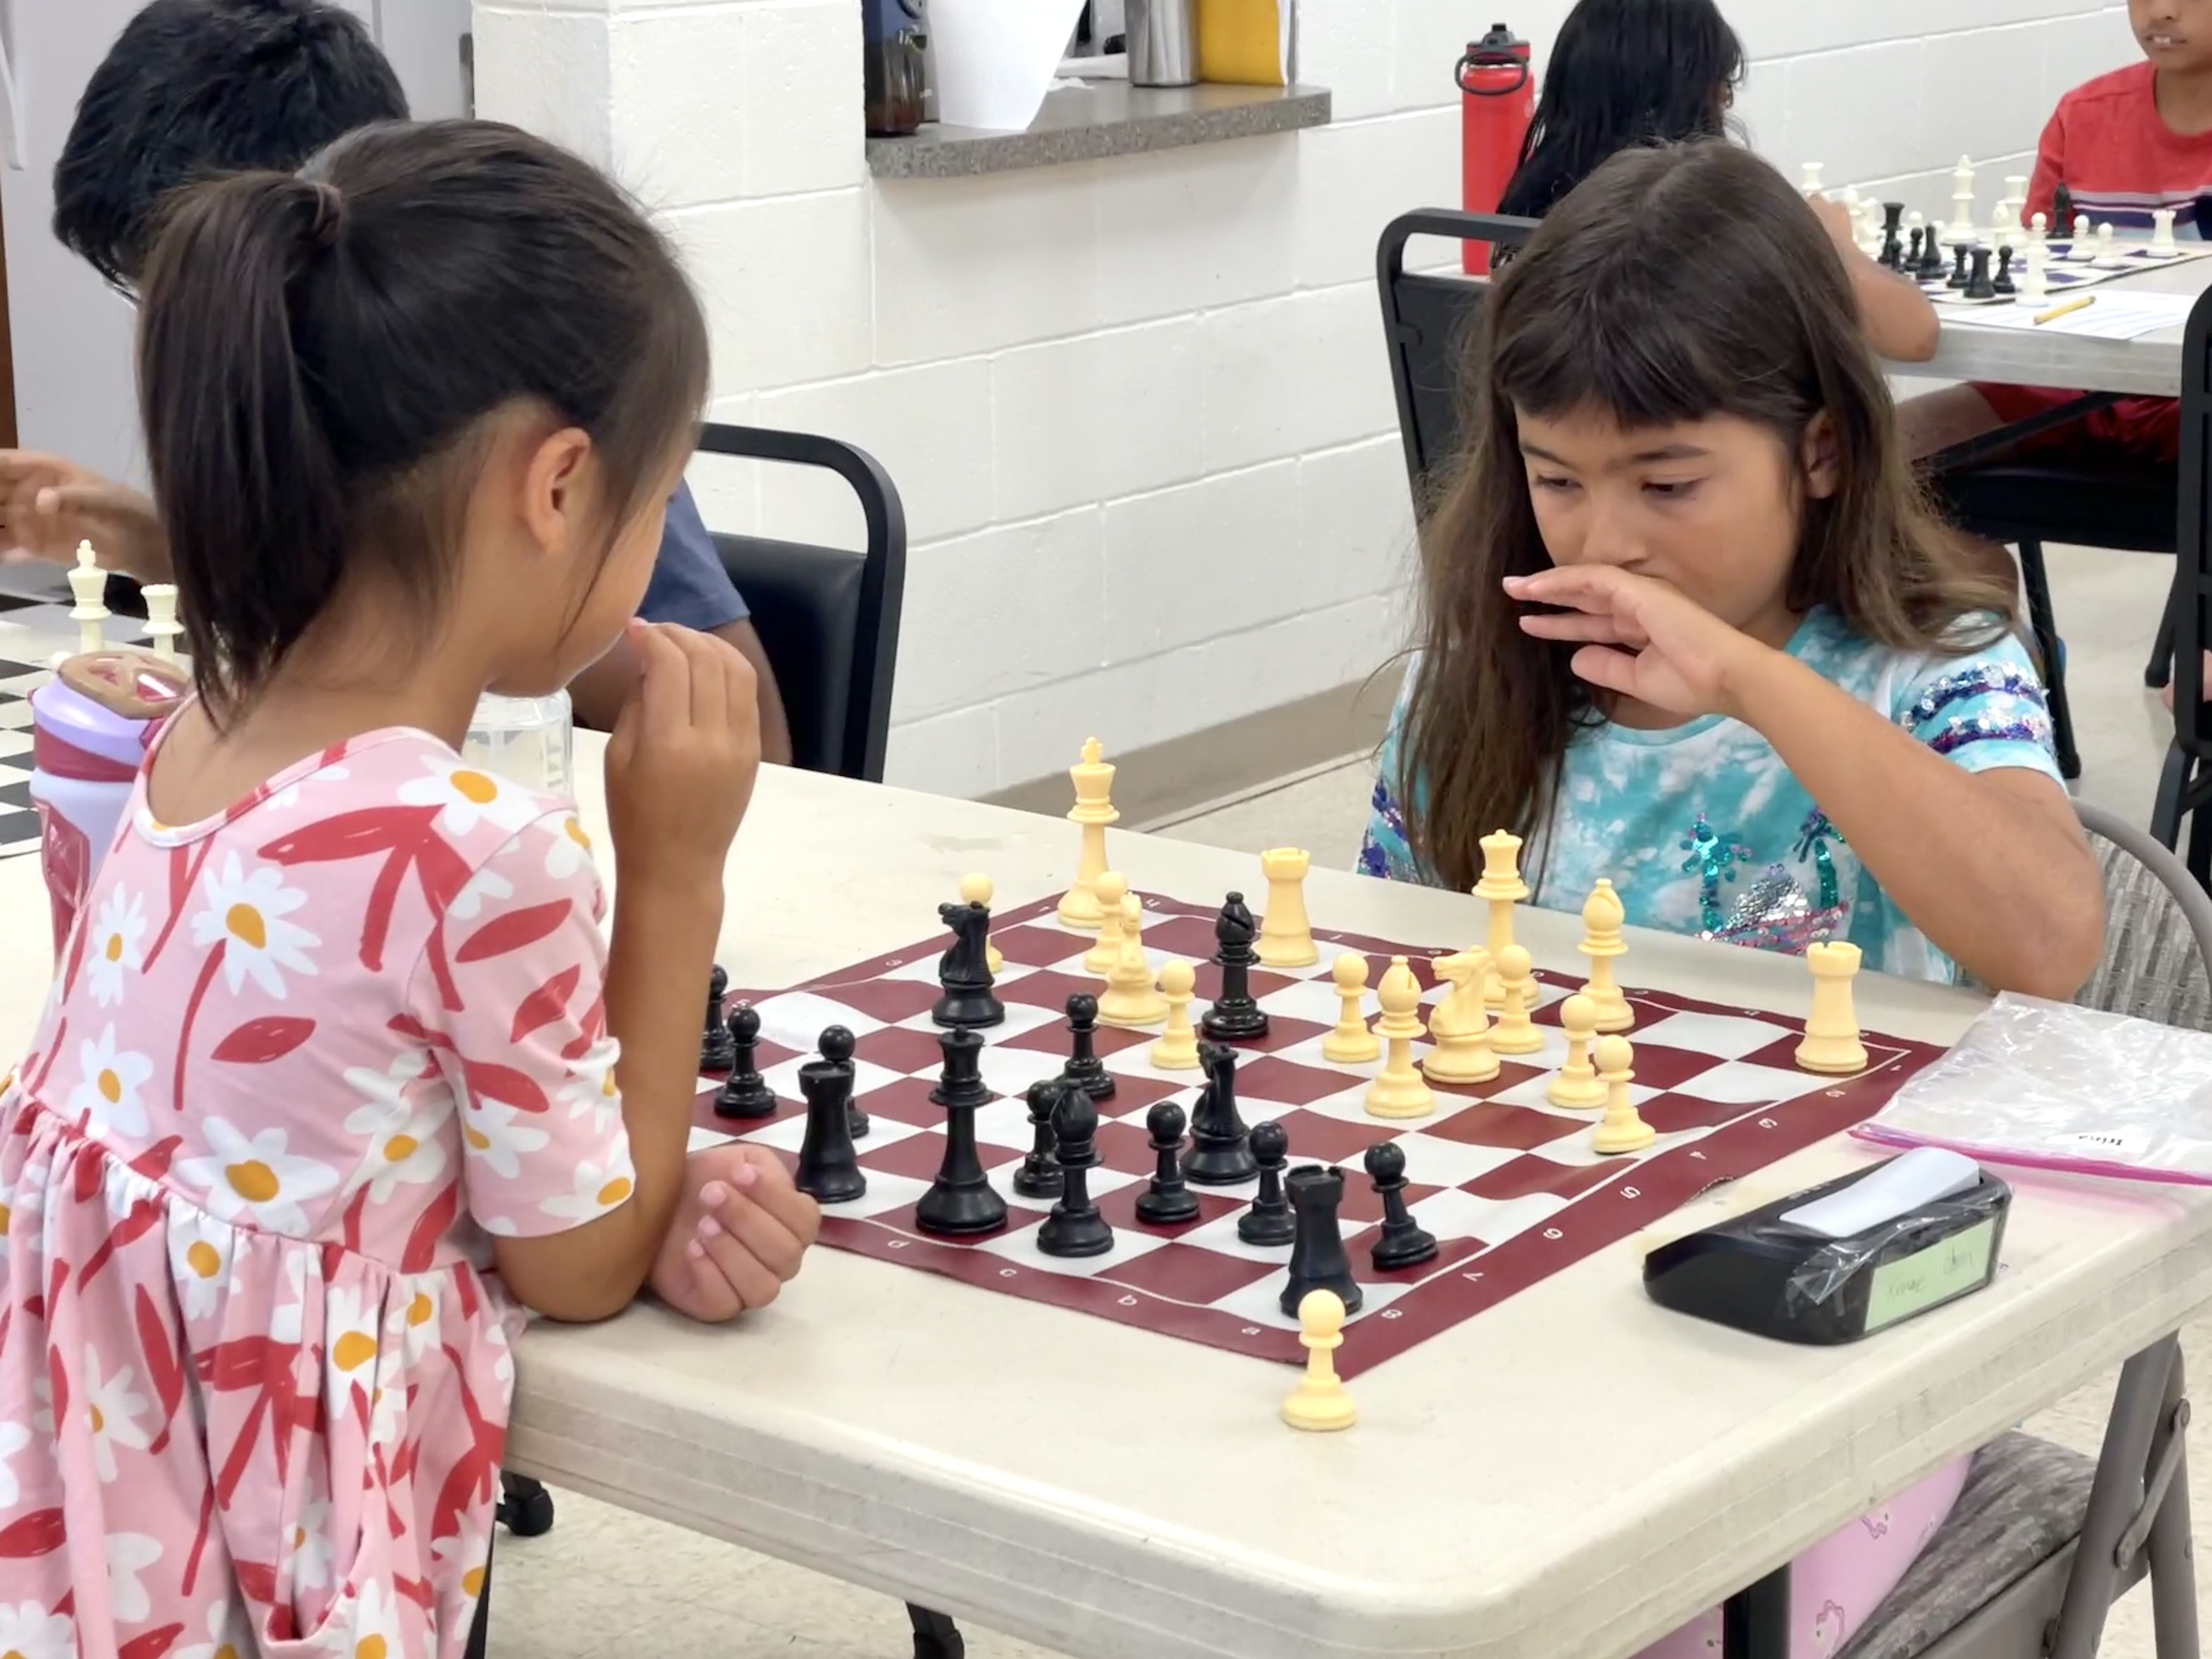 Fezari Chess Academy (@fezarichessacademy) • Instagram photos and videos